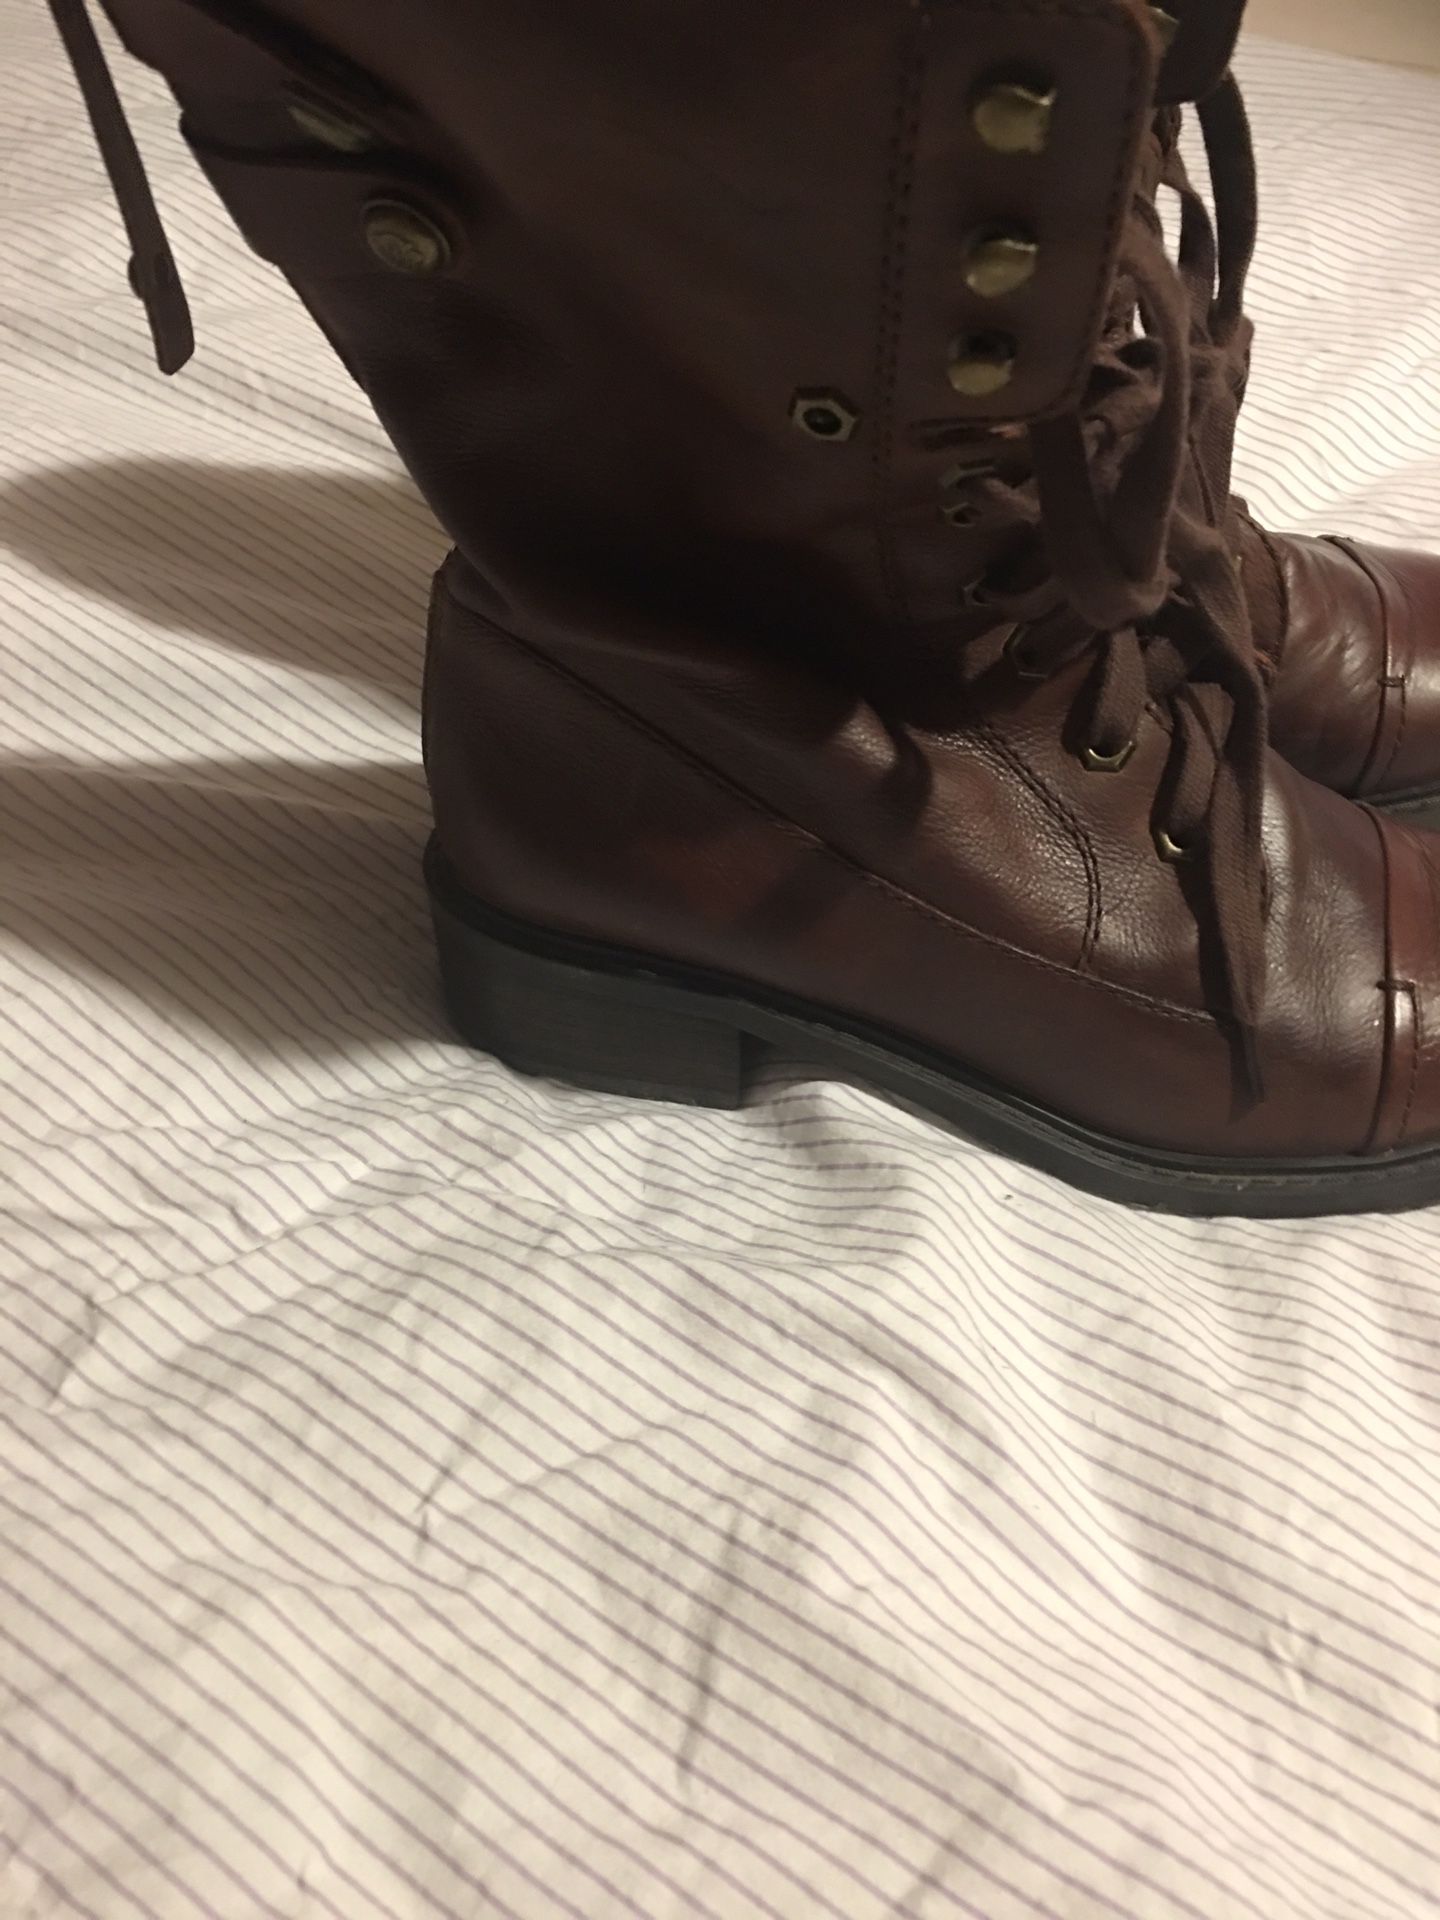 Leather Sam Edelman boots